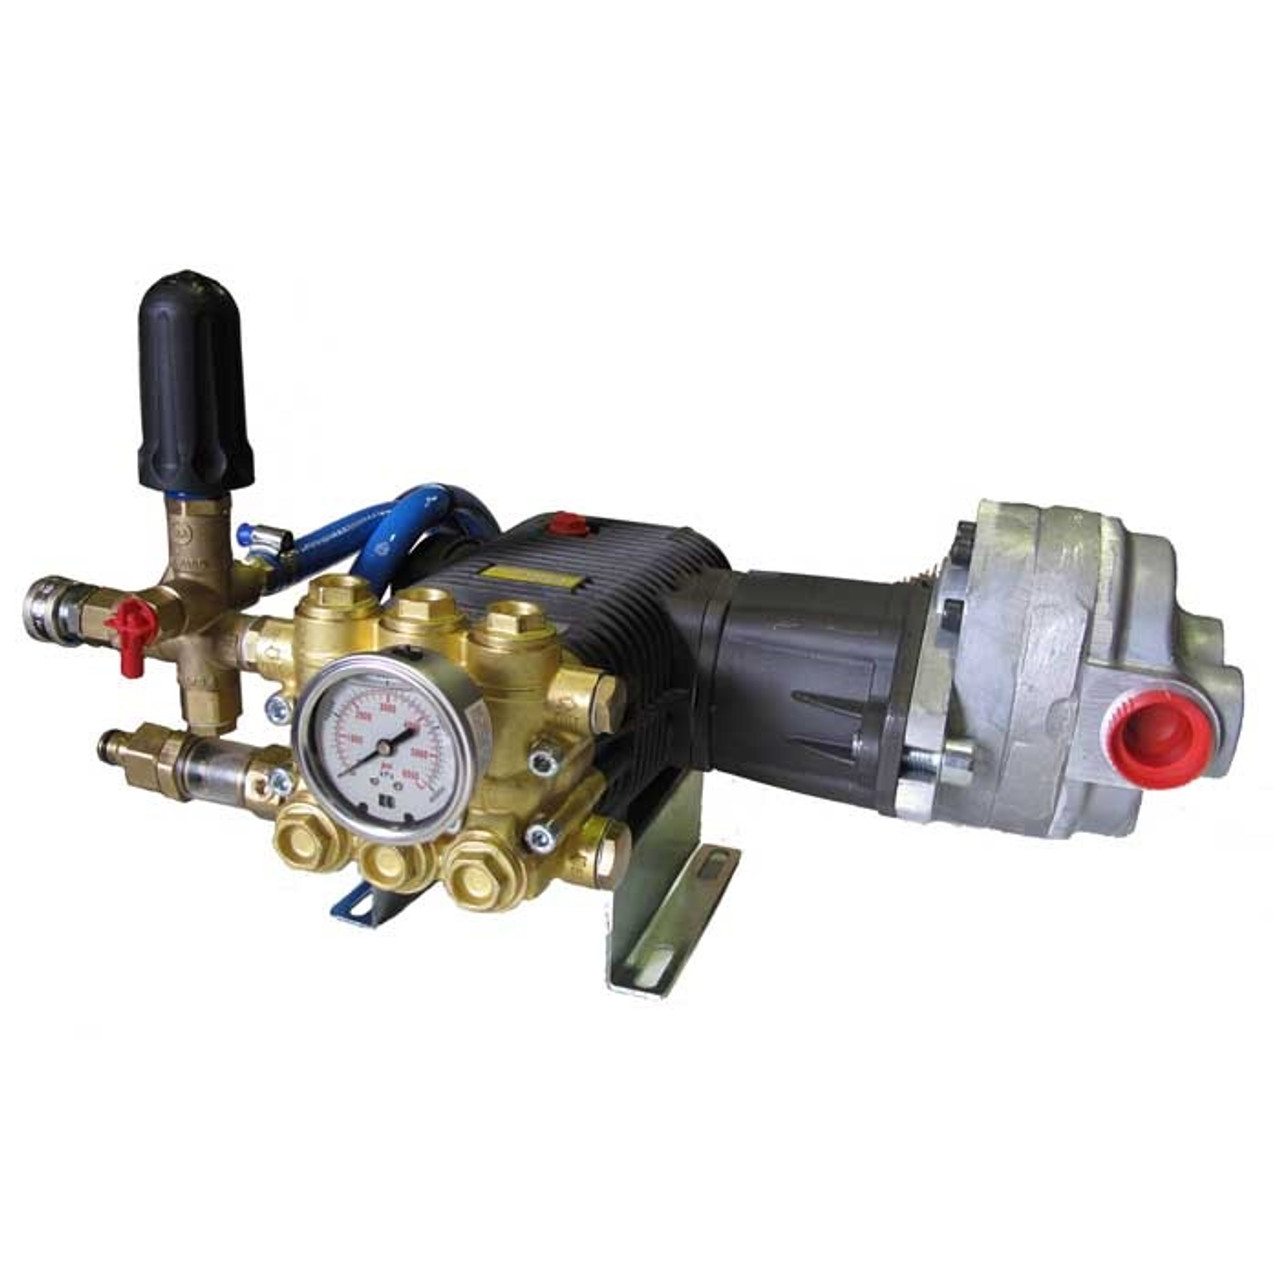 Hydraulic Drive Pressure Cleaner 3600psi 32L/min - Custom Build (210 TW8036Hyd54)